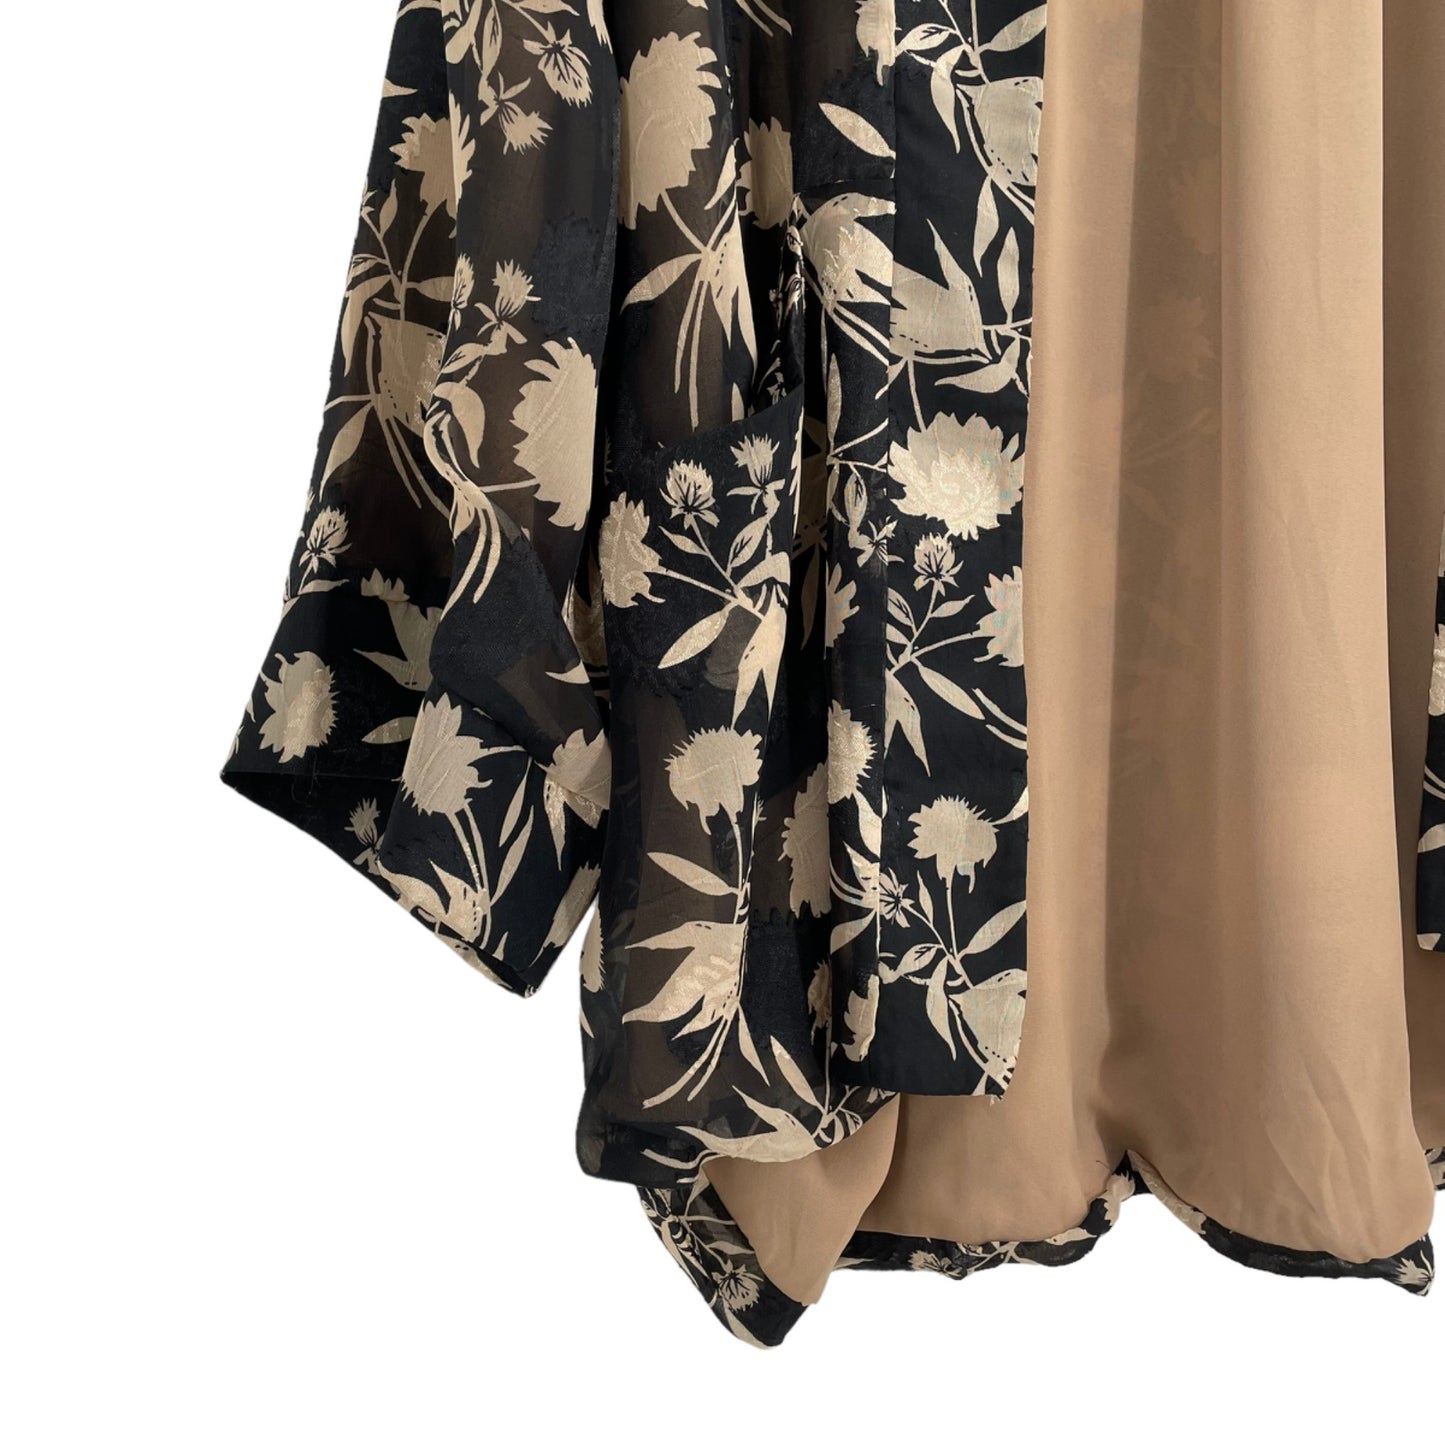 Dress Forum Black Tan Floral Open Front Kimono Womens Size Medium Pockets